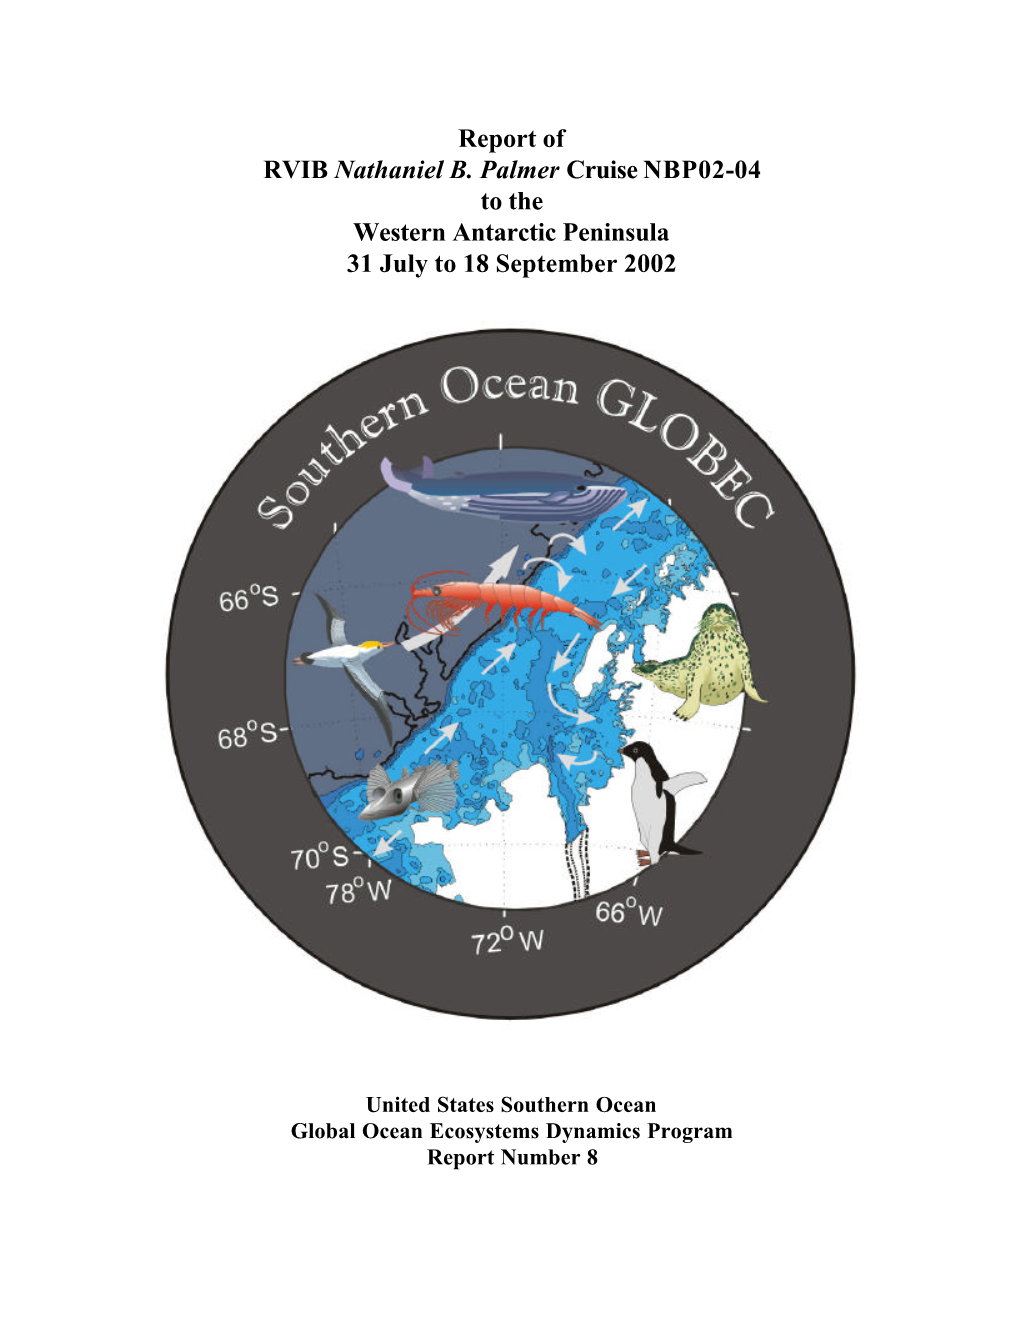 Report of RVIB Nathaniel B. Palmer Cruise NBP02-04 to the Western Antarctic Peninsula 31 July to 18 September 2002